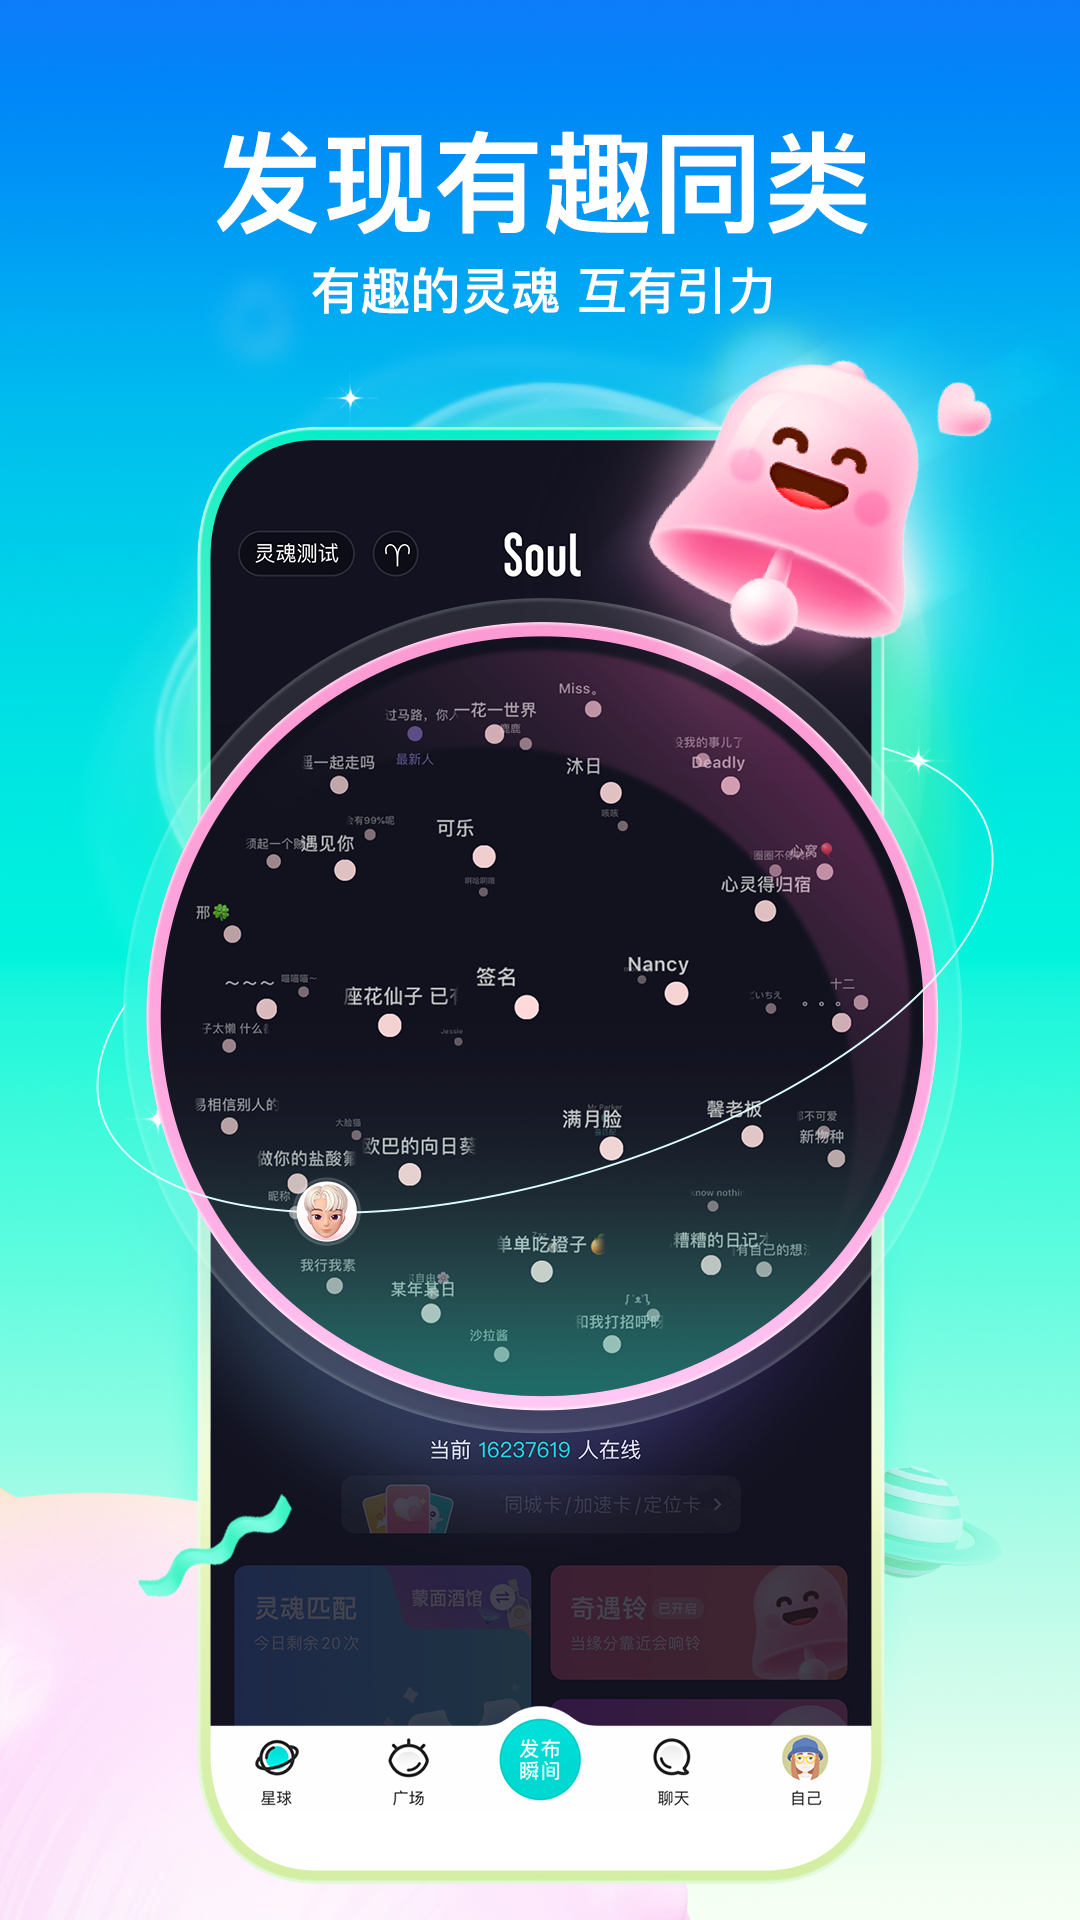 soul app